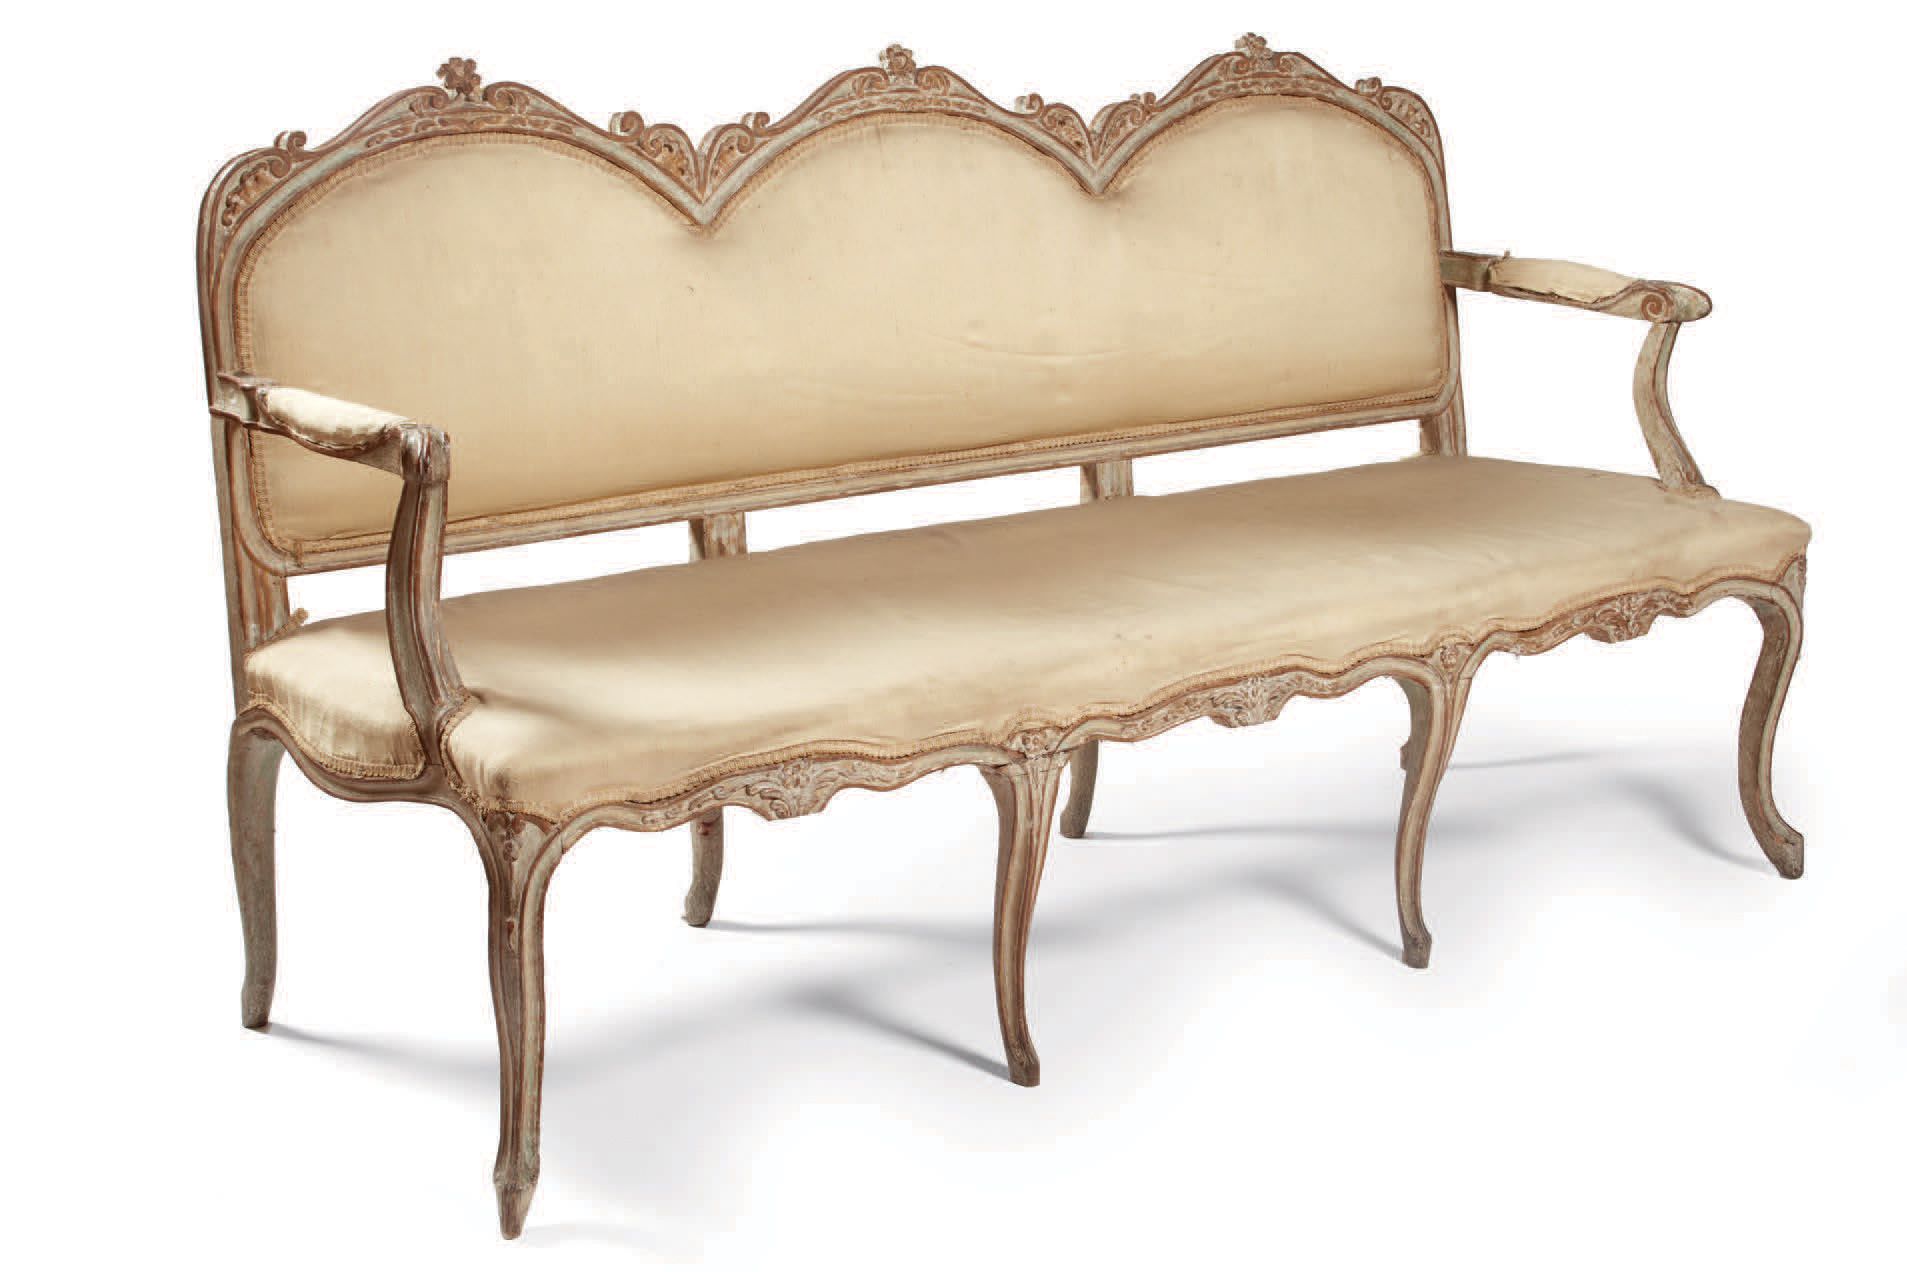 Null 三人座沙发，由雕刻的木头制成，涂有白色和金色的漆，形状的背部装饰有涡旋和玫瑰花纹，波浪形的腿，背部、扶手和座椅都用奶油色的织物装饰。18世纪
Cana&hellip;